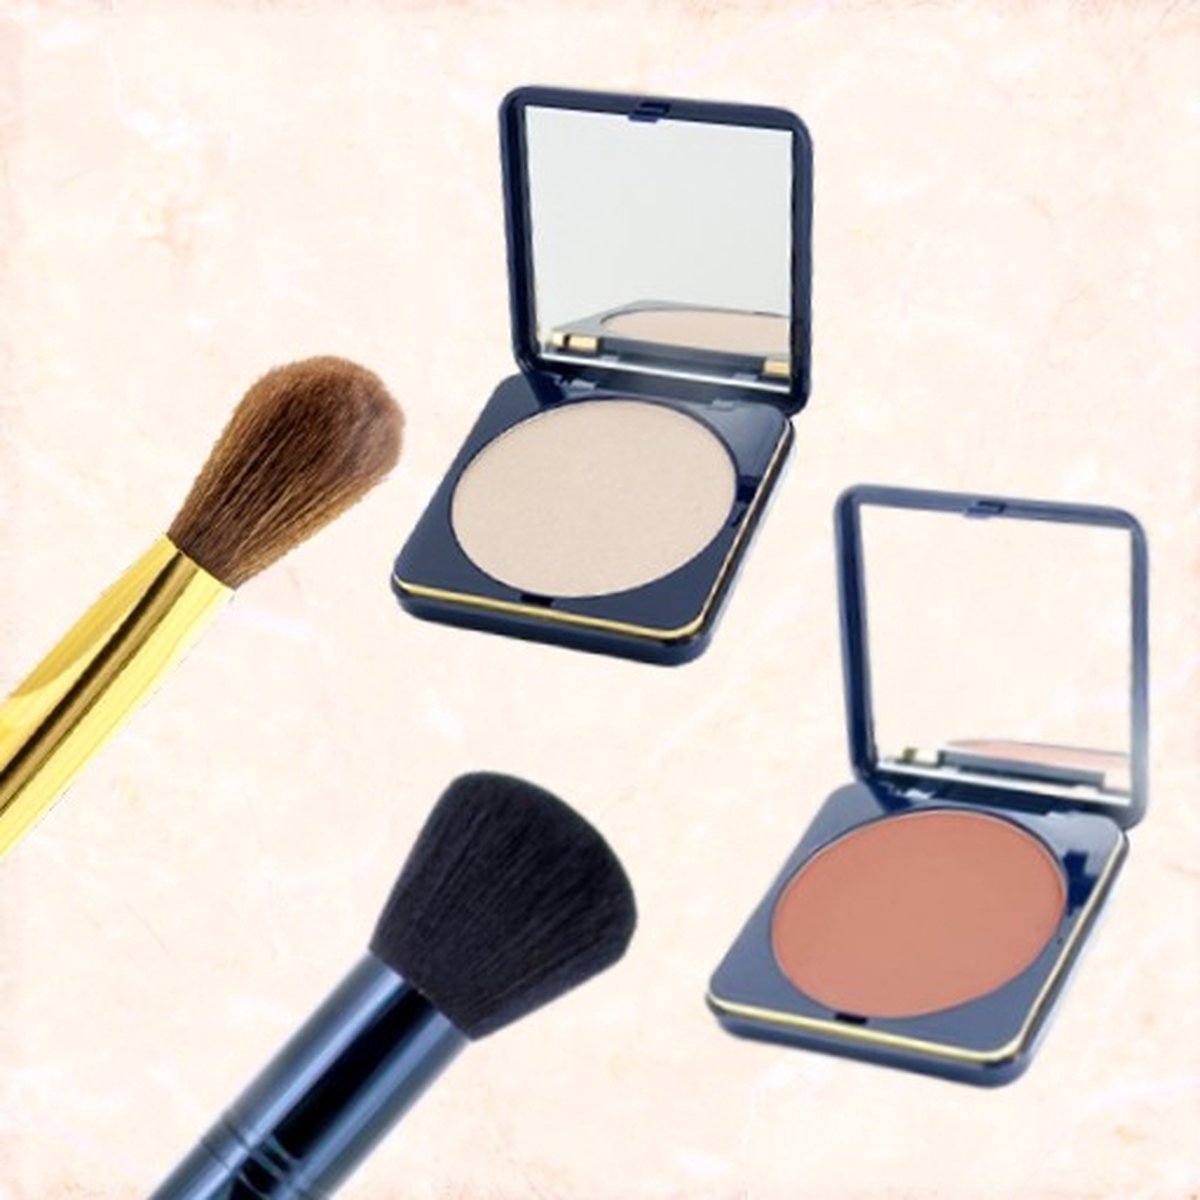 Bolero cosmetics - Gift set - Bronzer incl. kwast - Zilveren highlighter incl. kwast - Make-up